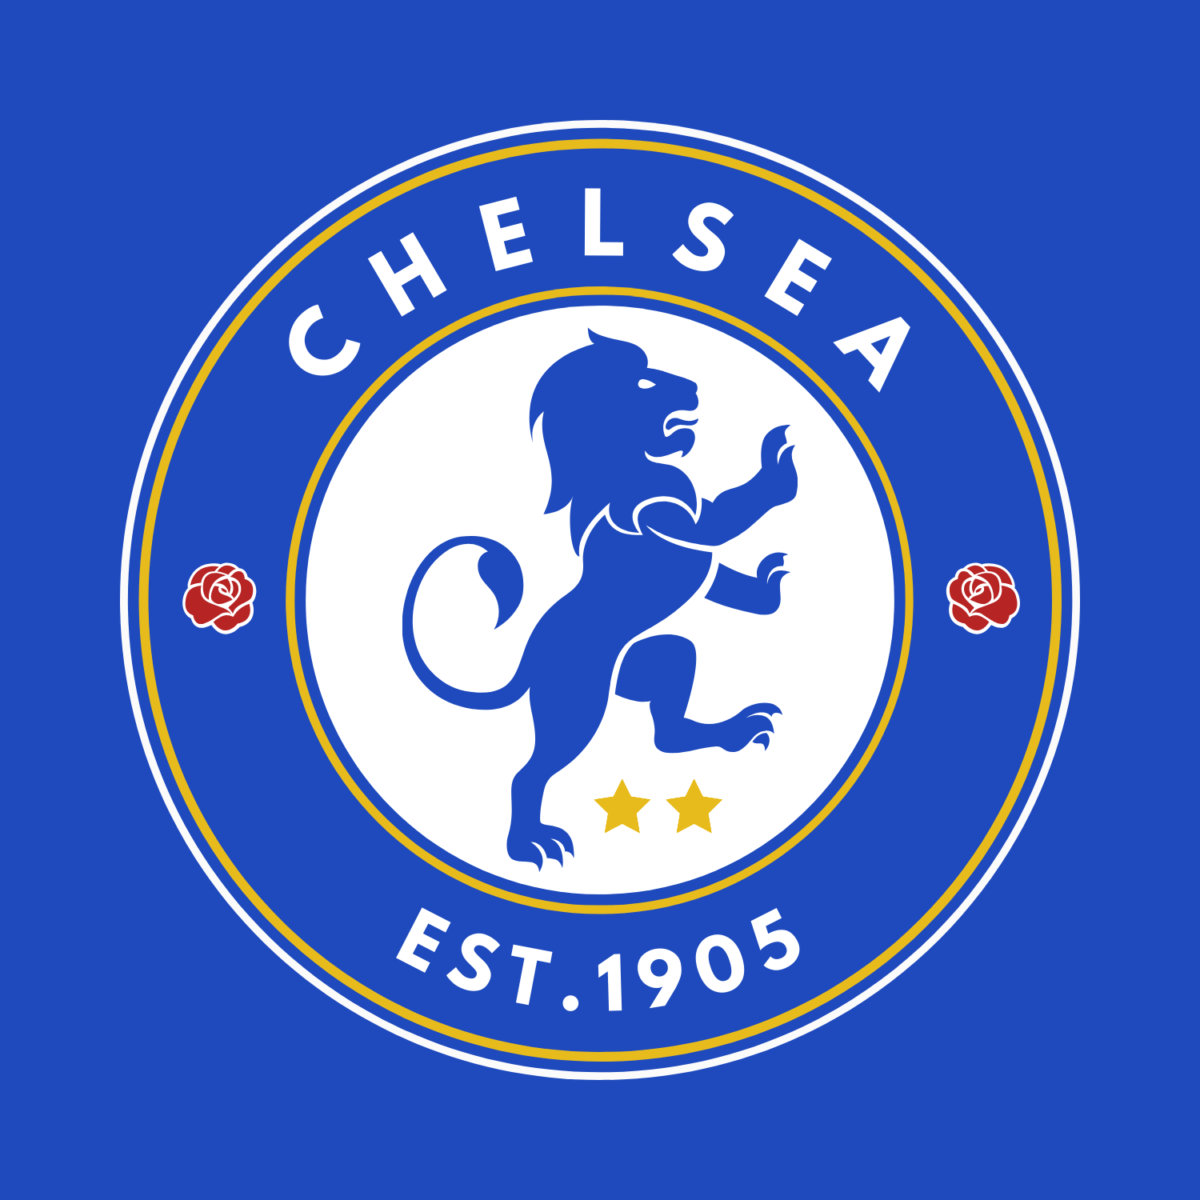 Logo de Chelsea